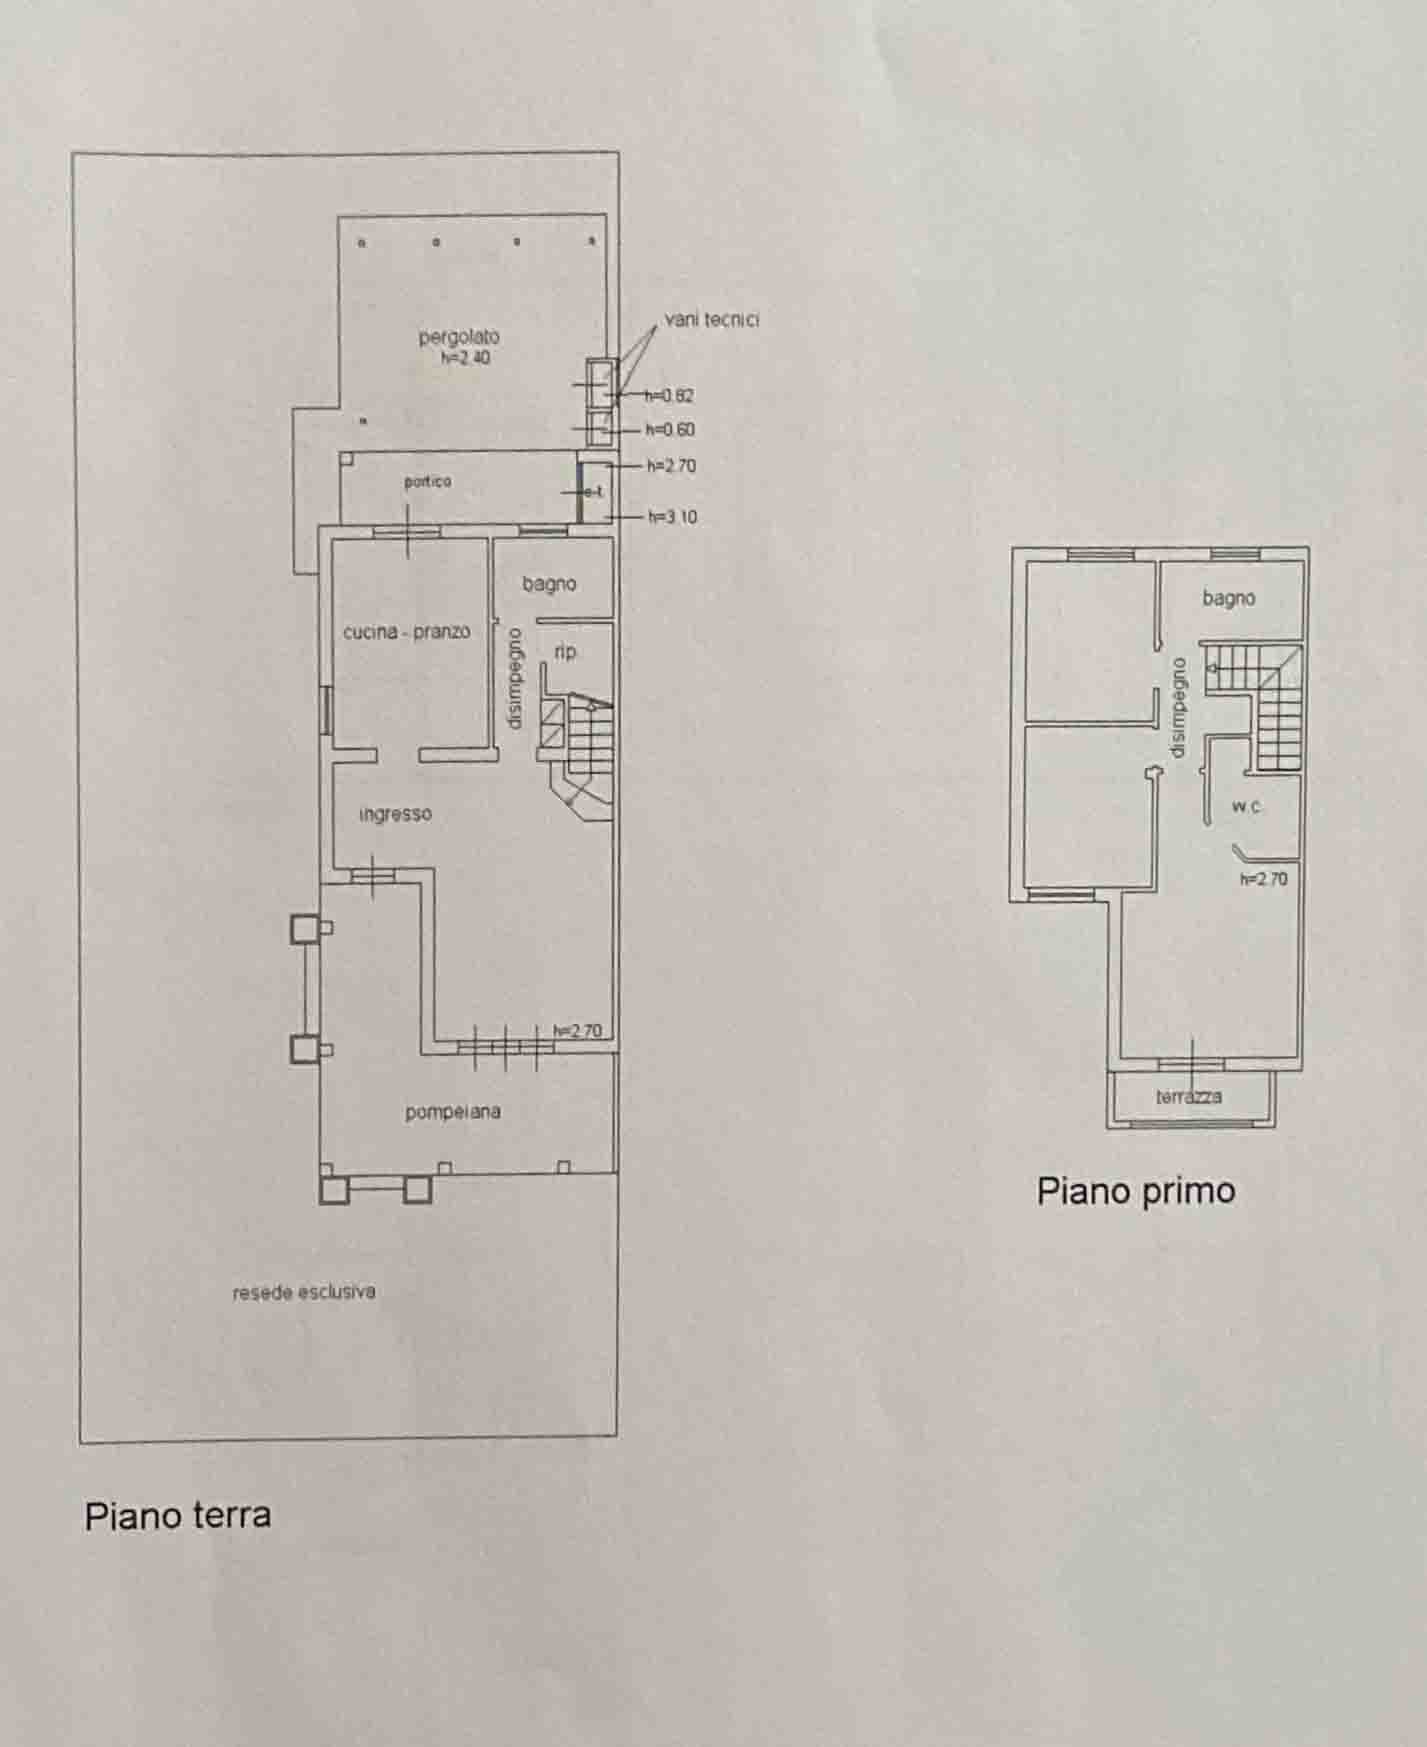 Semi-detached house for sale, ref. 28054 (Plan 1/1)